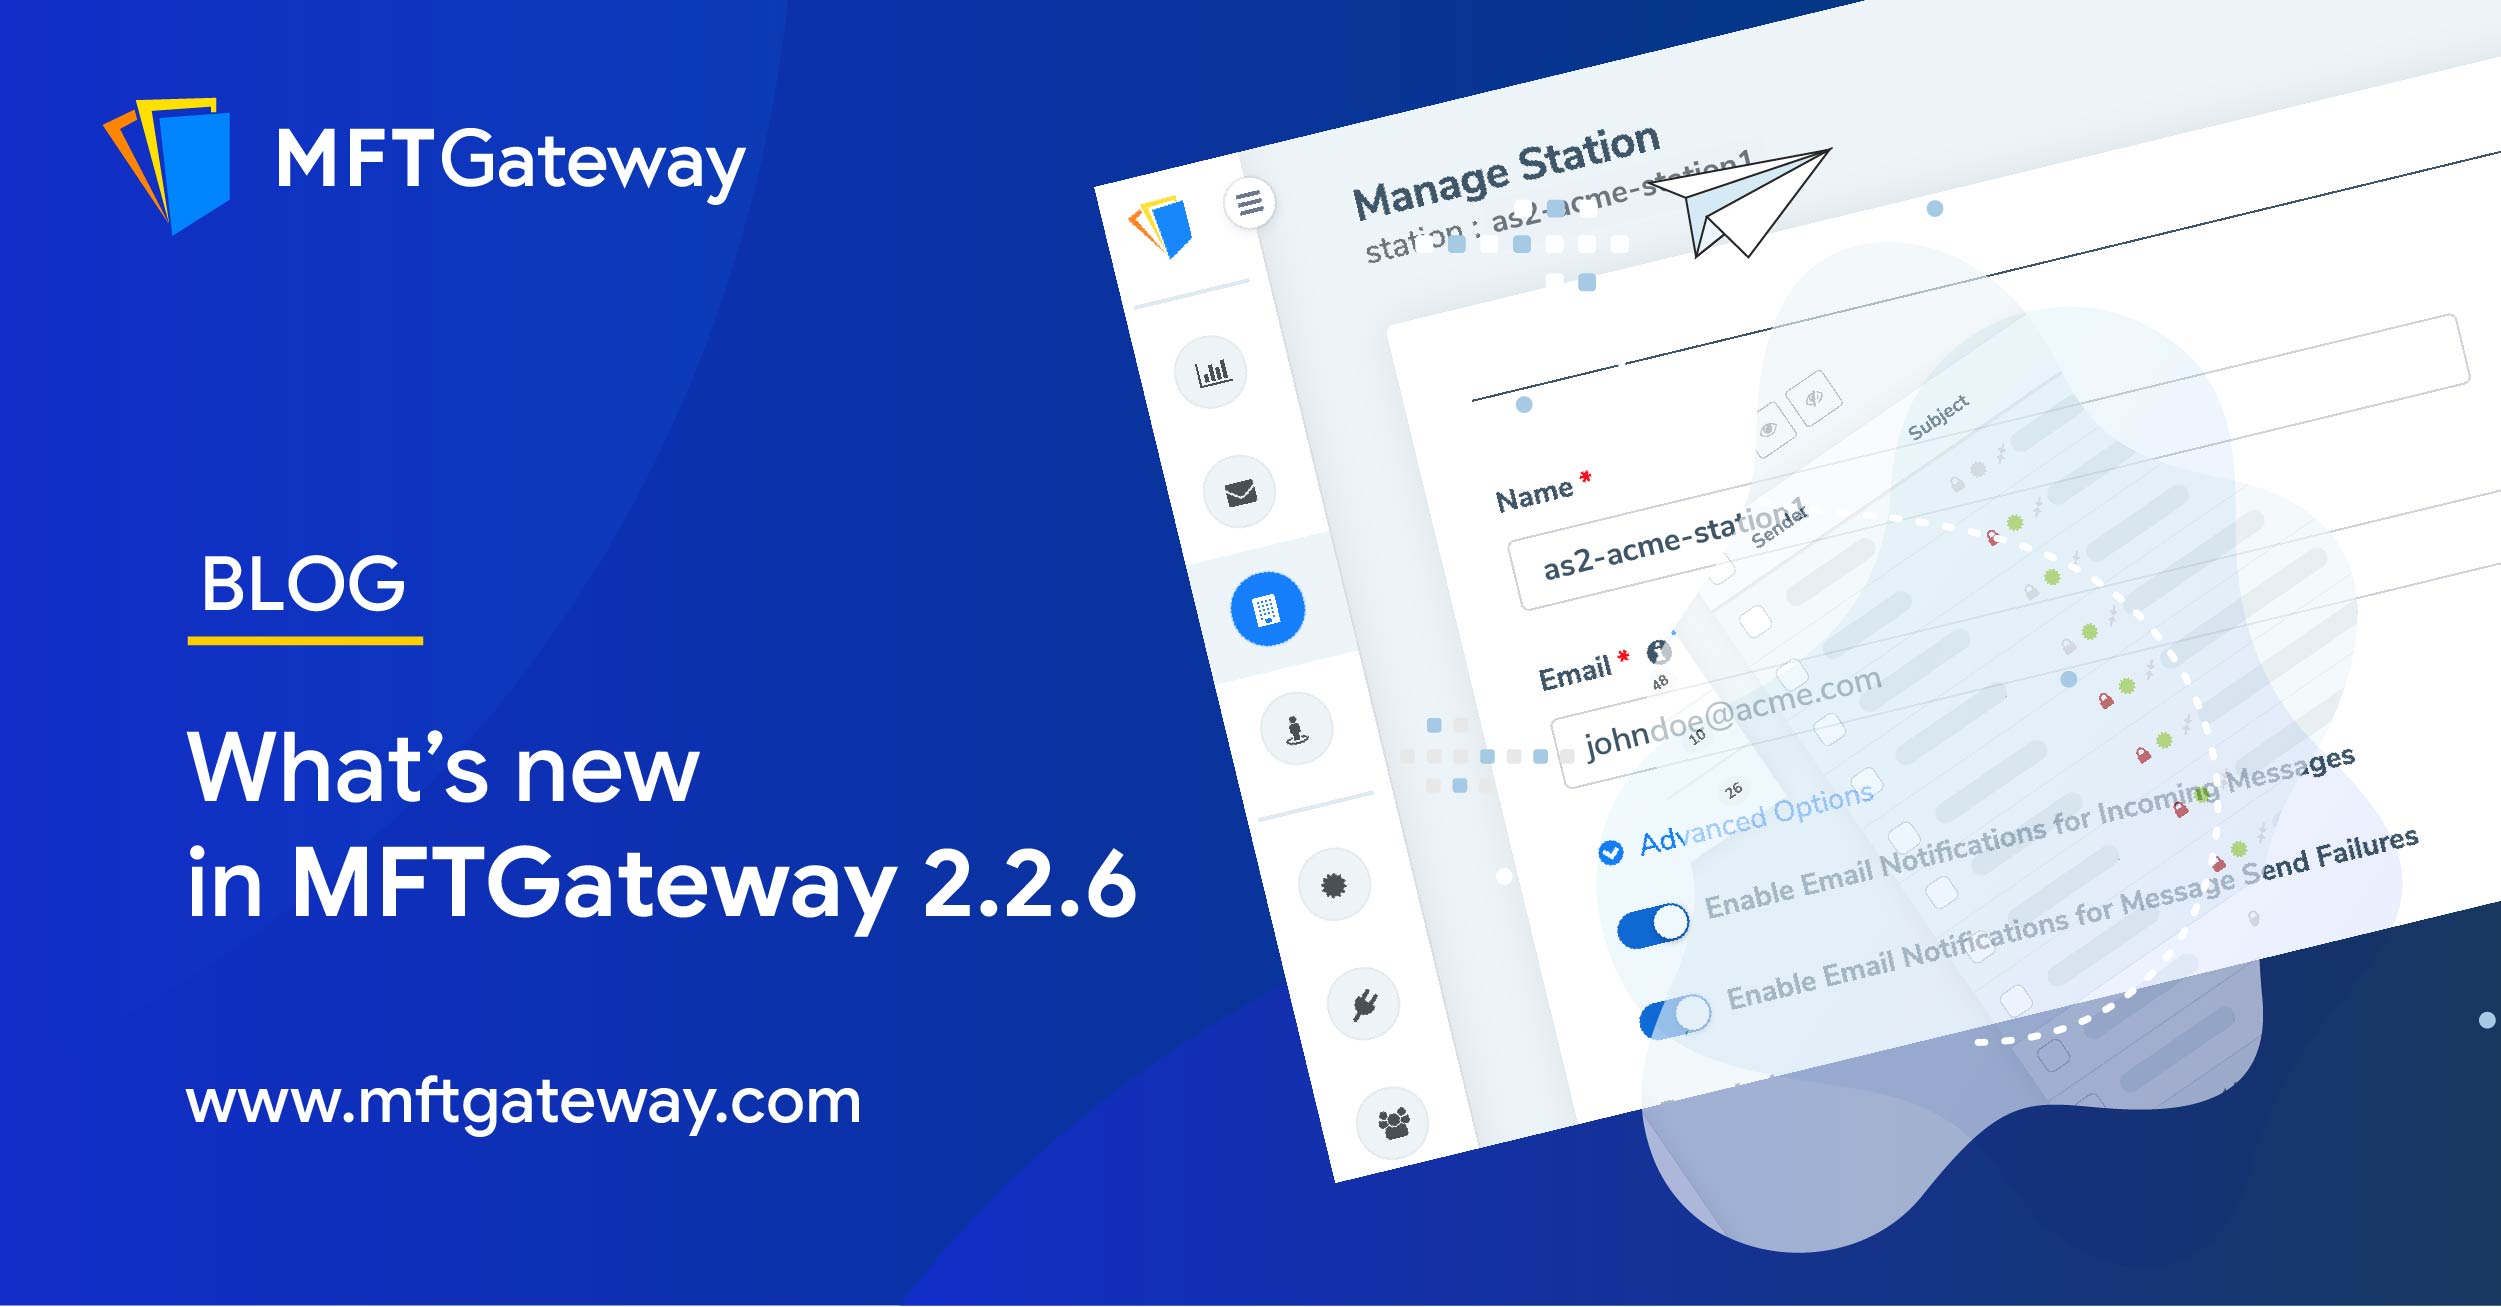 MFT Gateway 2.2.6